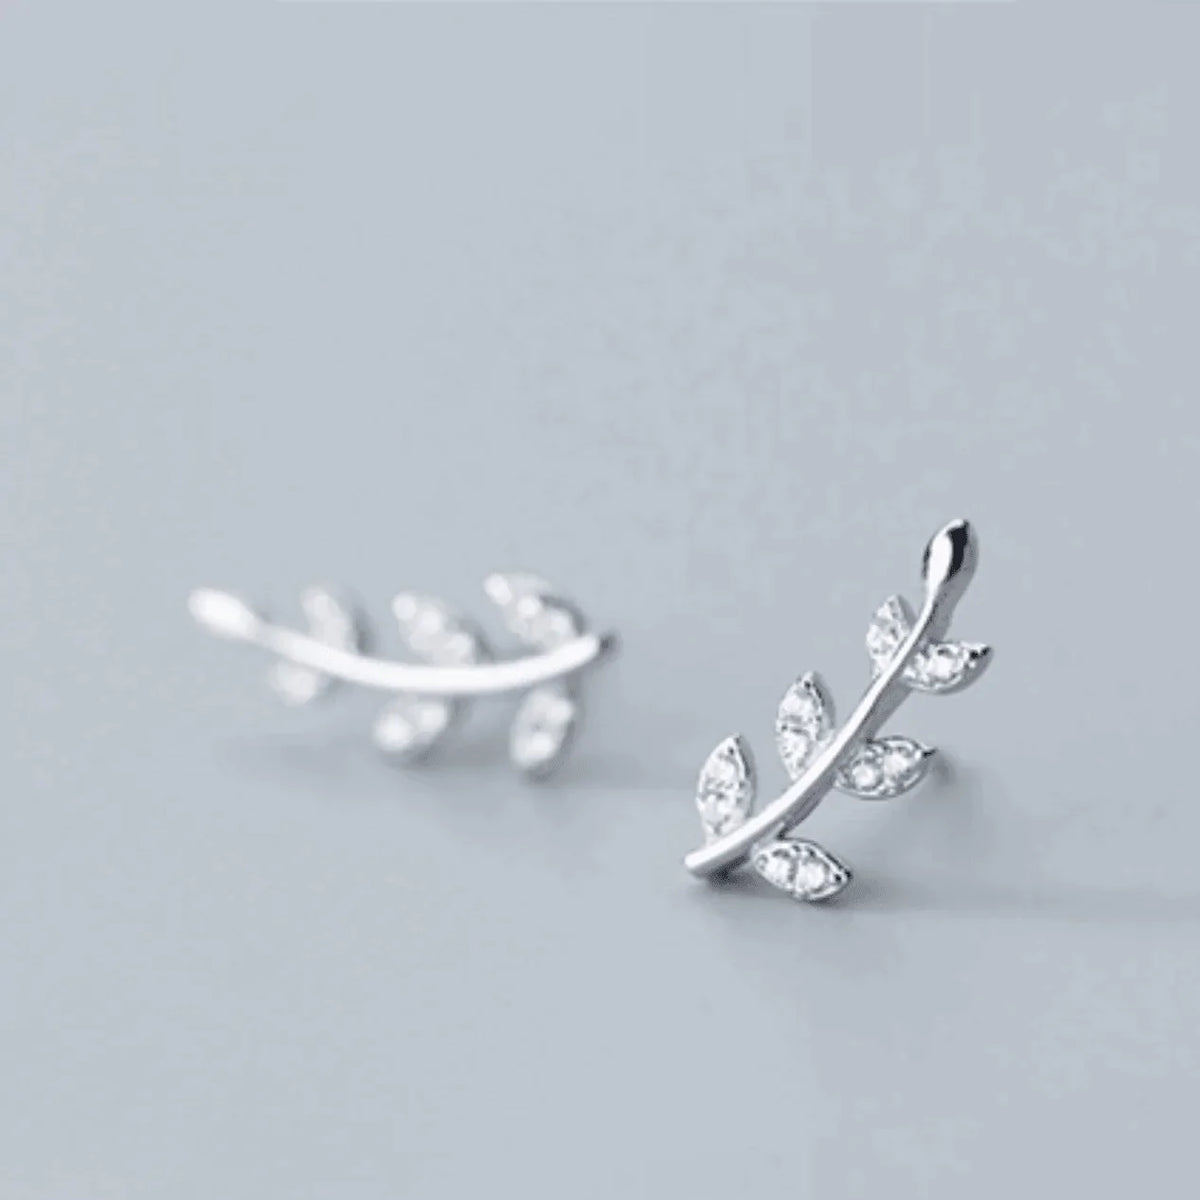 Elegant Leaf Stud Earrings - Brilliant Cubic Zirconia Stones on 925 Sterling Silver